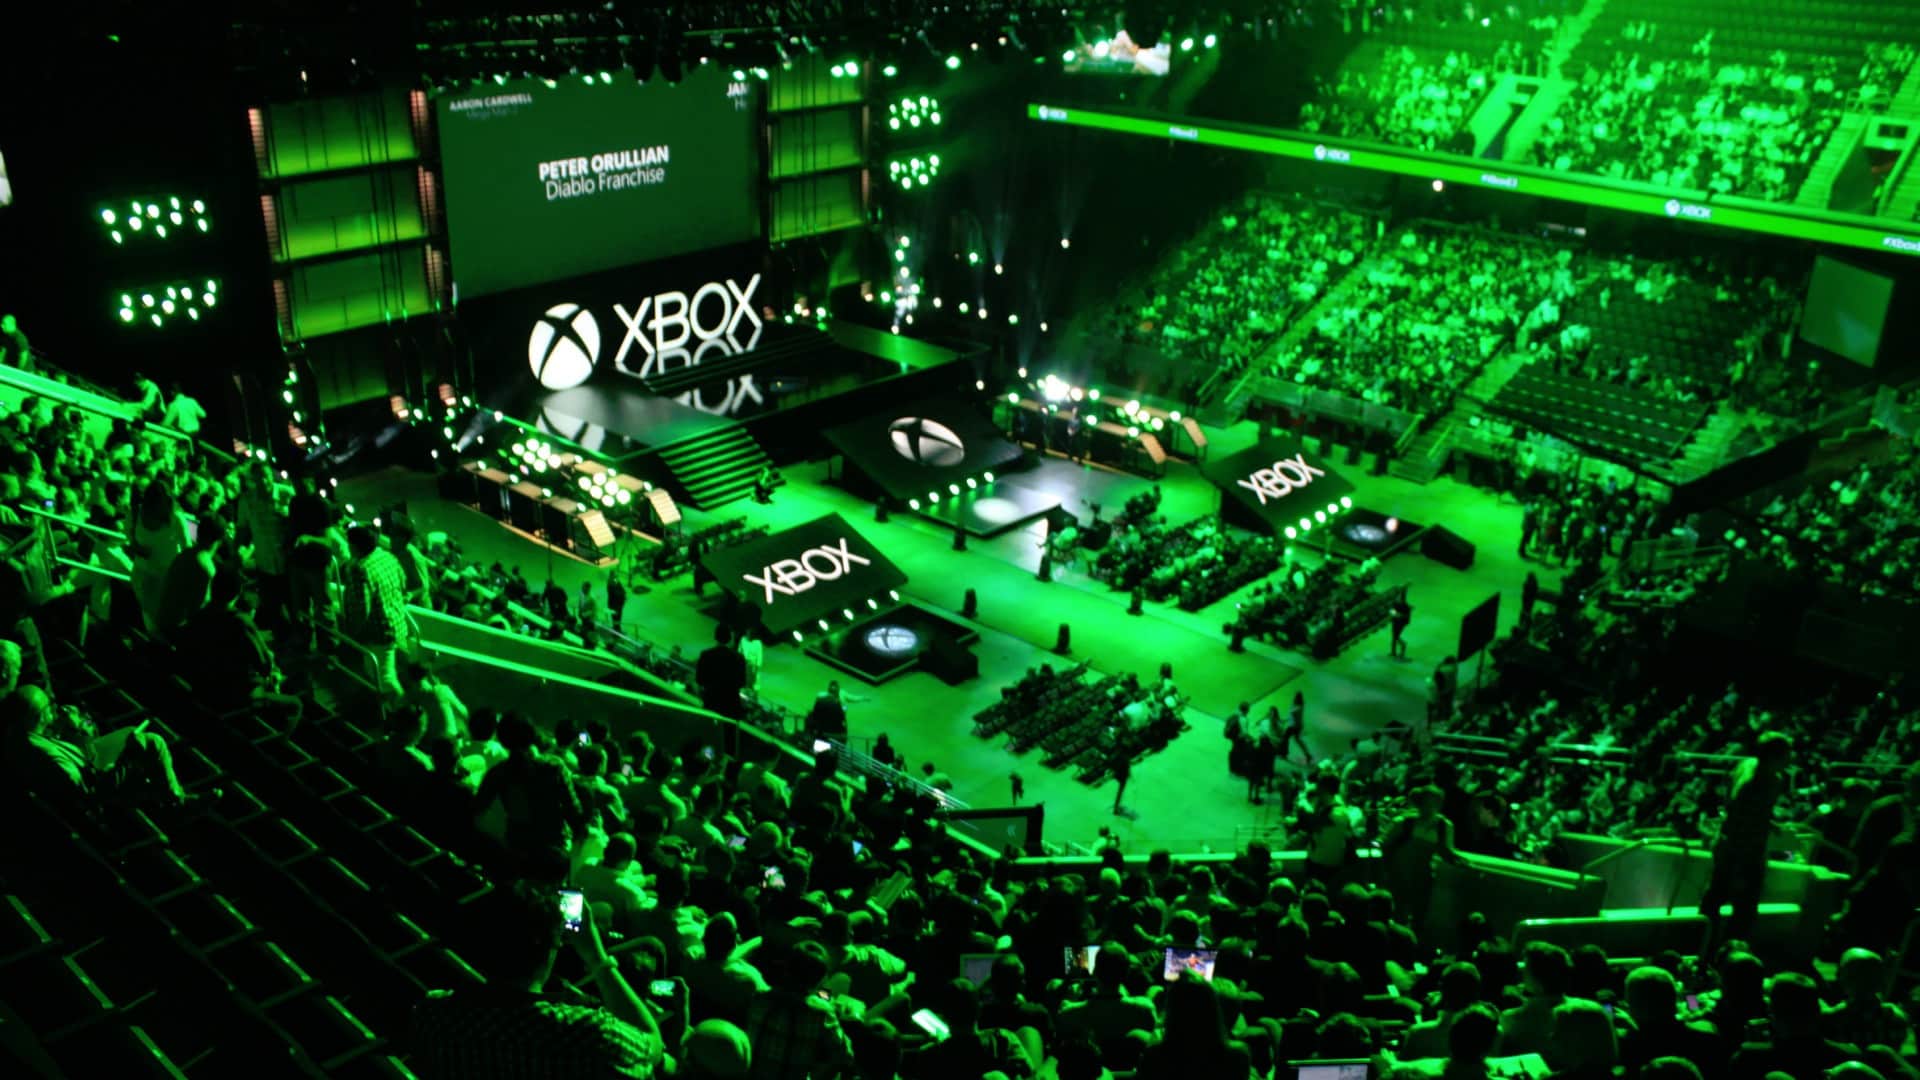 George Bernard cel Halve cirkel Xbox Confirms E3 Show Floor Absence, Will Instead Host Xbox Games Showcase  During E3 Digital on June 11 - MP1st